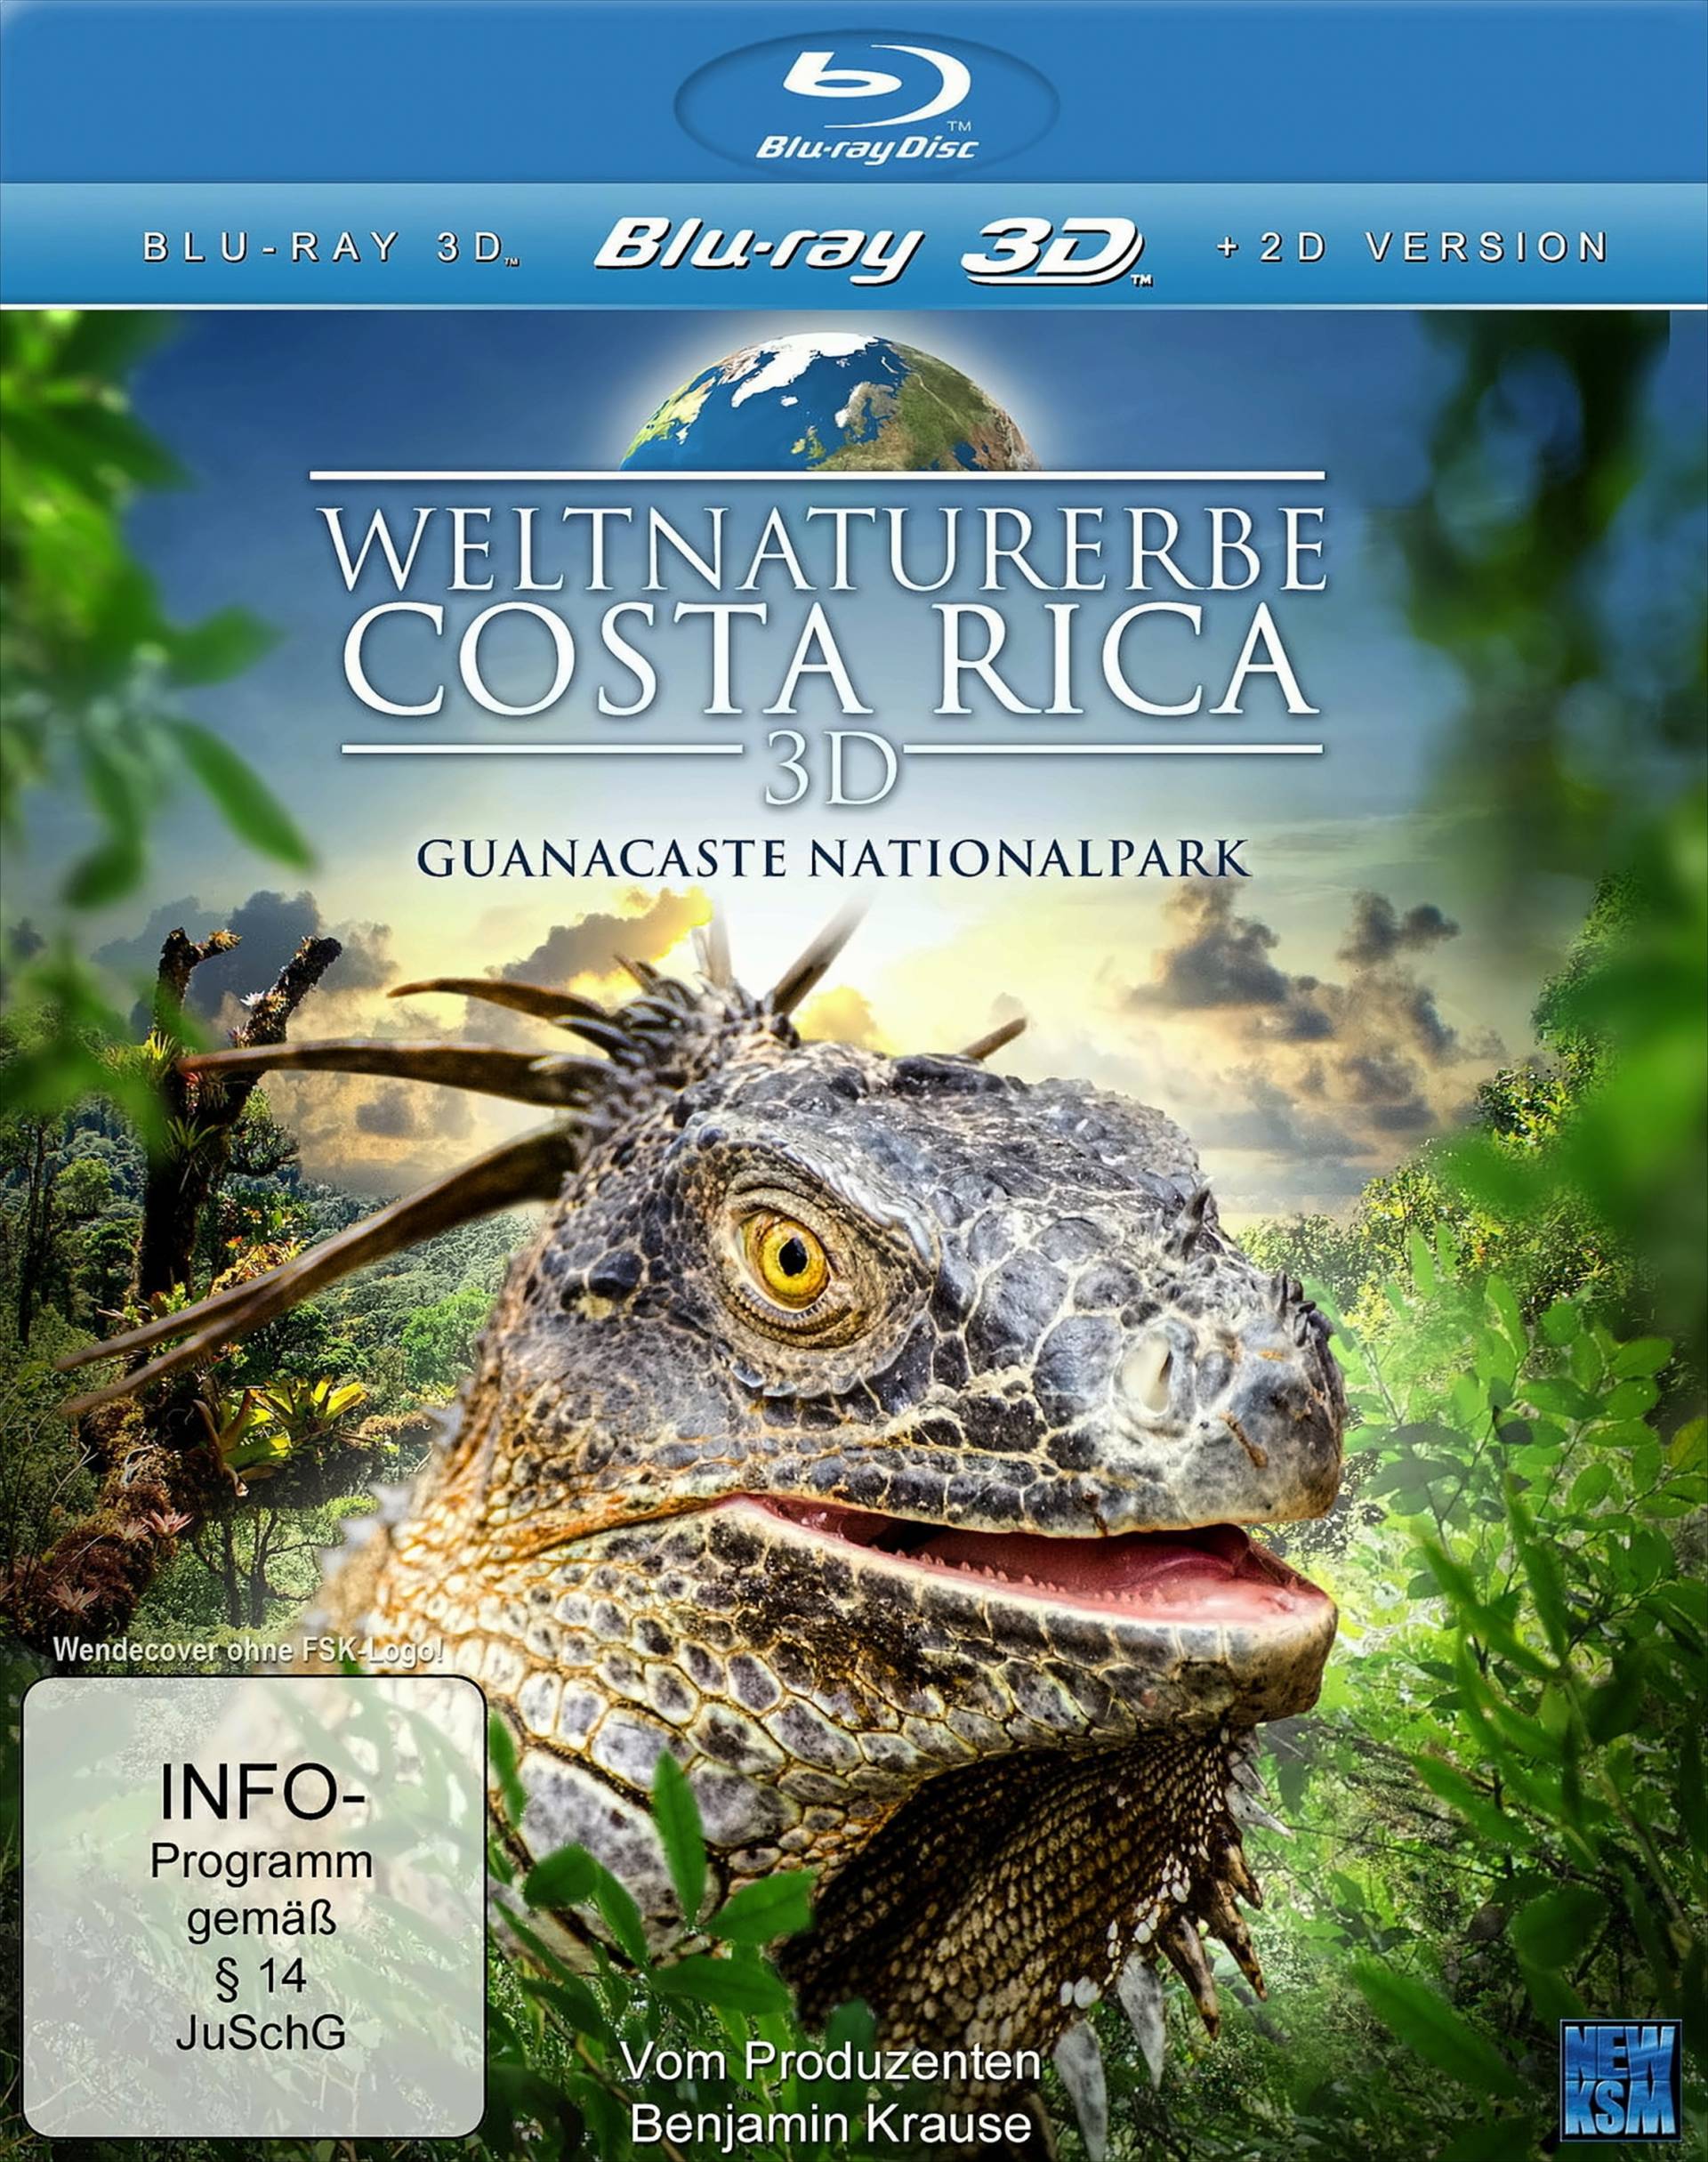 Weltnaturerbe Costa Rica - Guancaste Nationalpark 3D von KSM